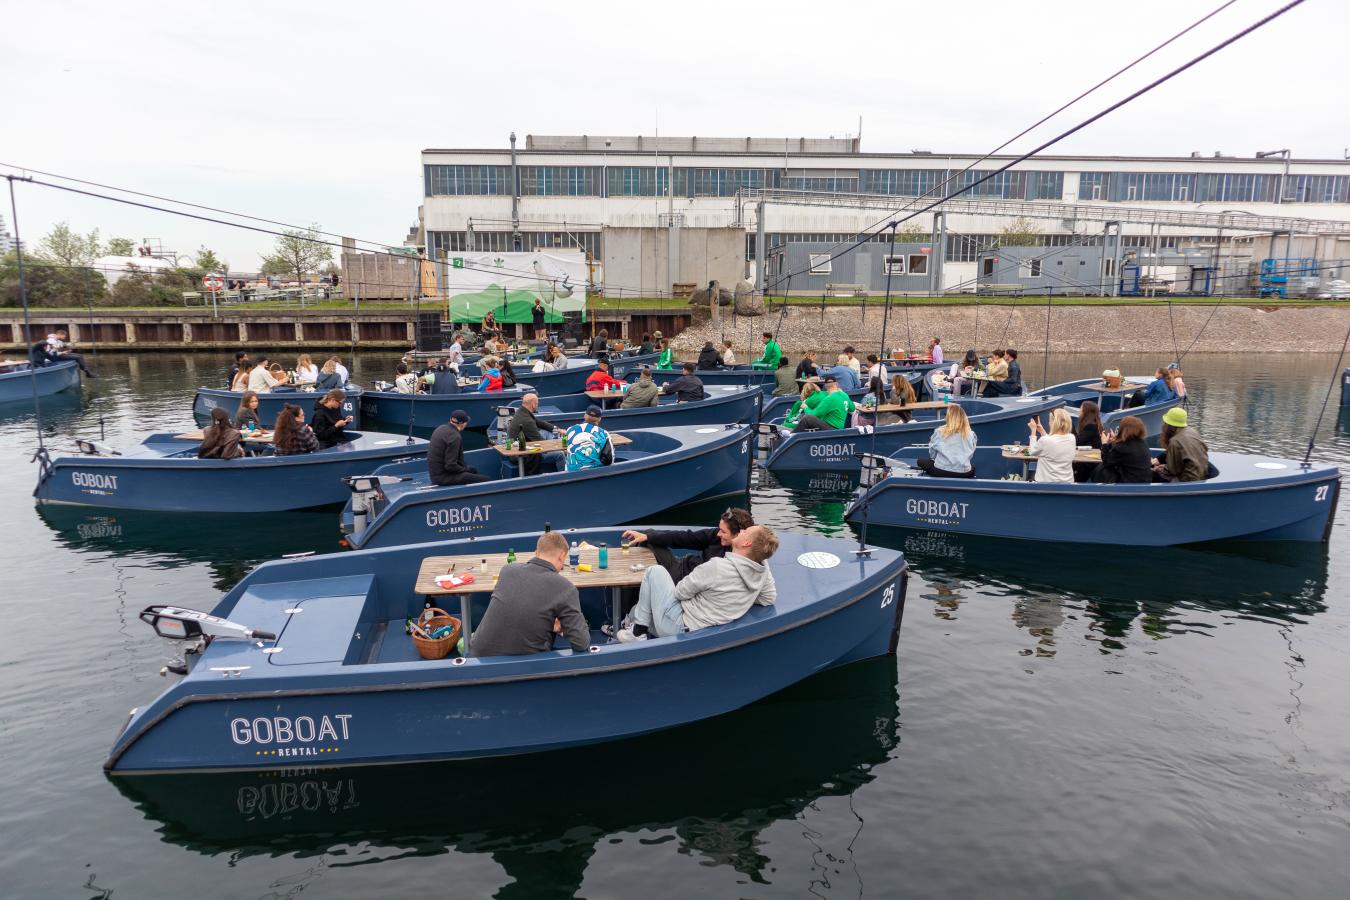 Copenhagen's canals host smart social distancing solution for